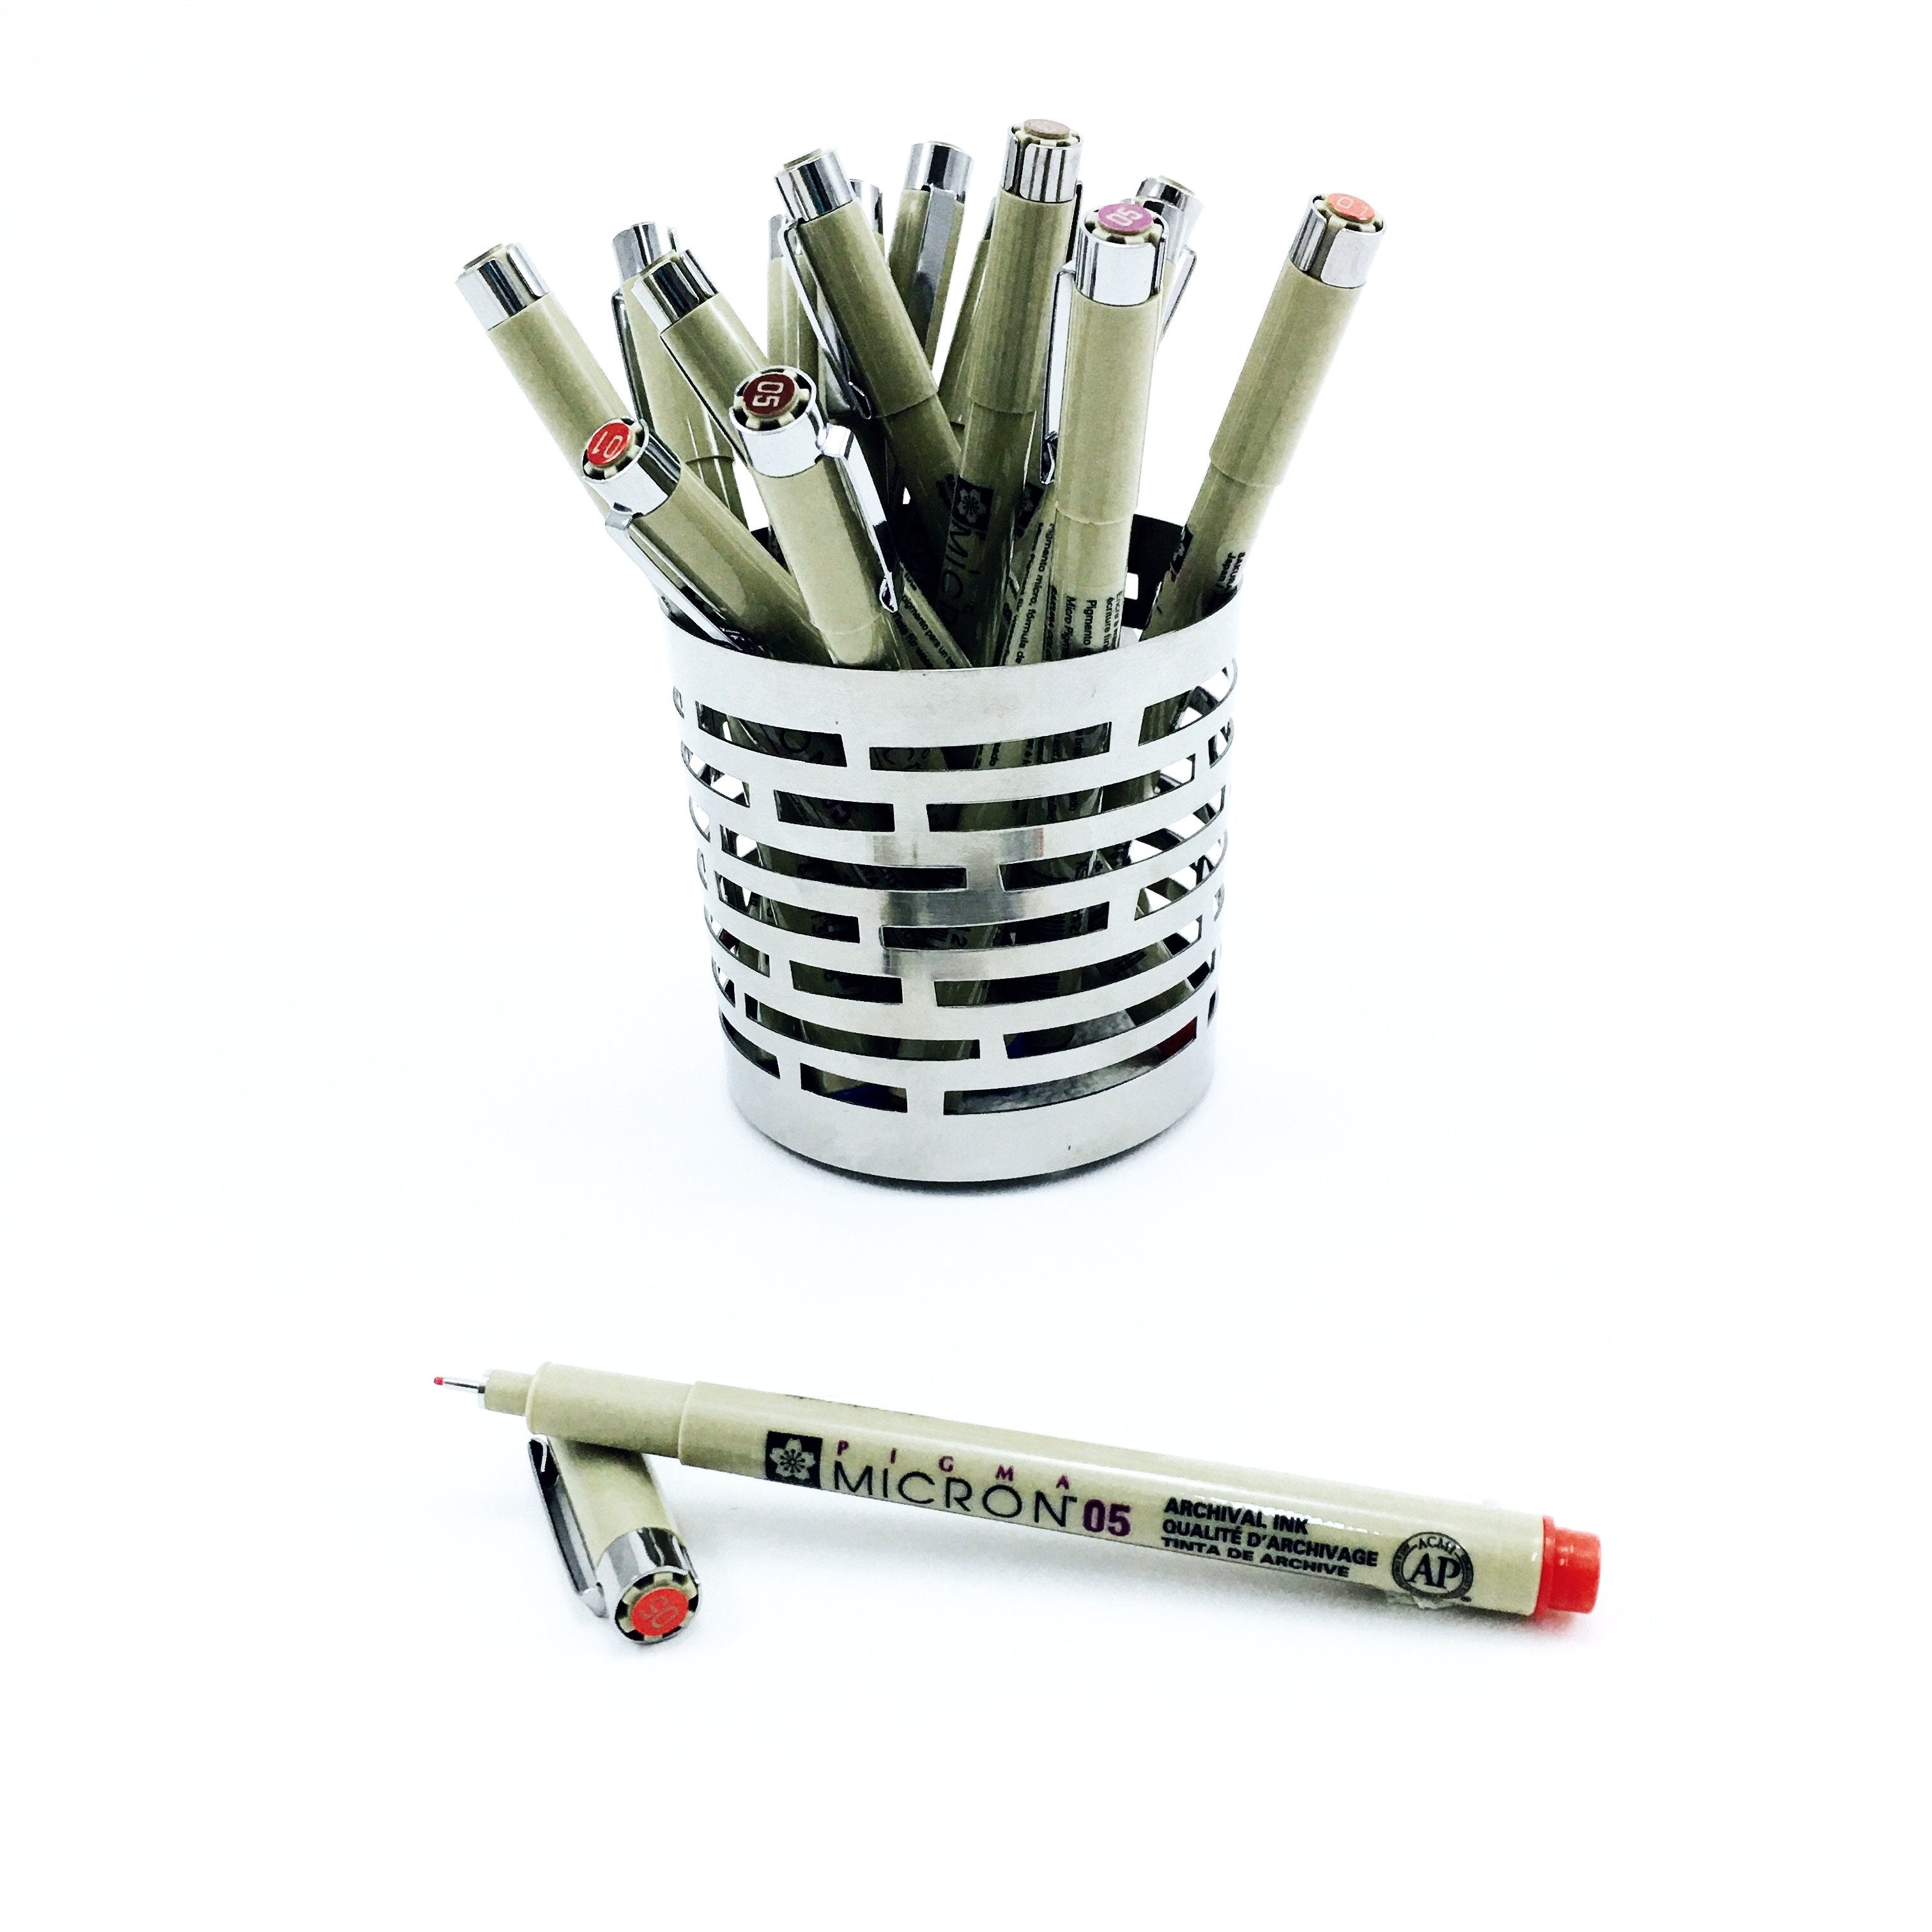 Bolígrafos individuales Pigma Micron - Colores – K. A. Artist Shop